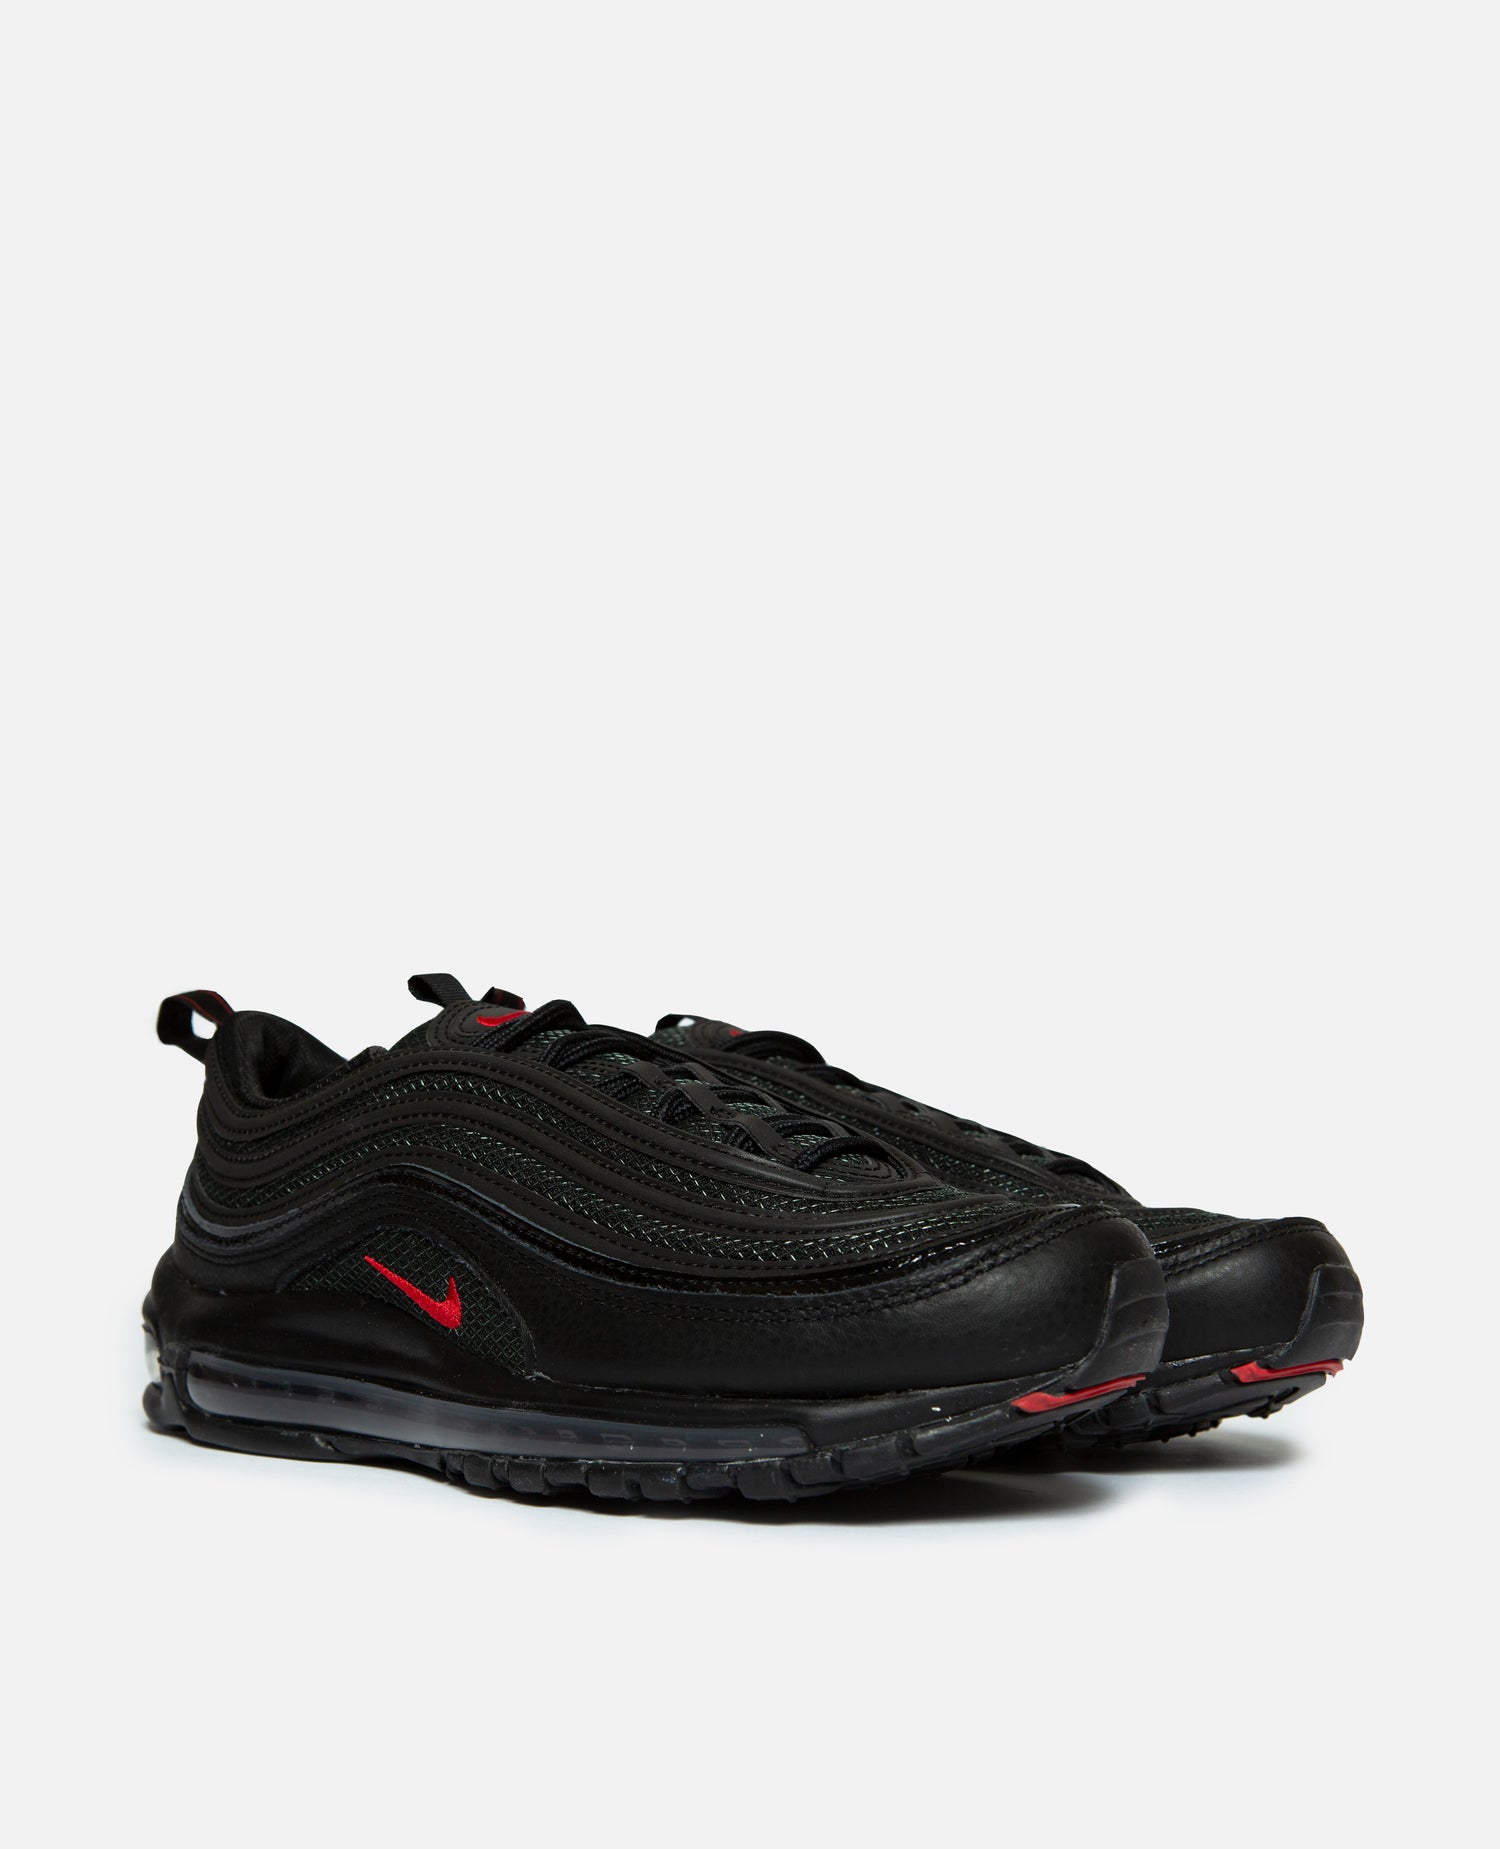 Nike Air Max 97 (Black/University Red-White)